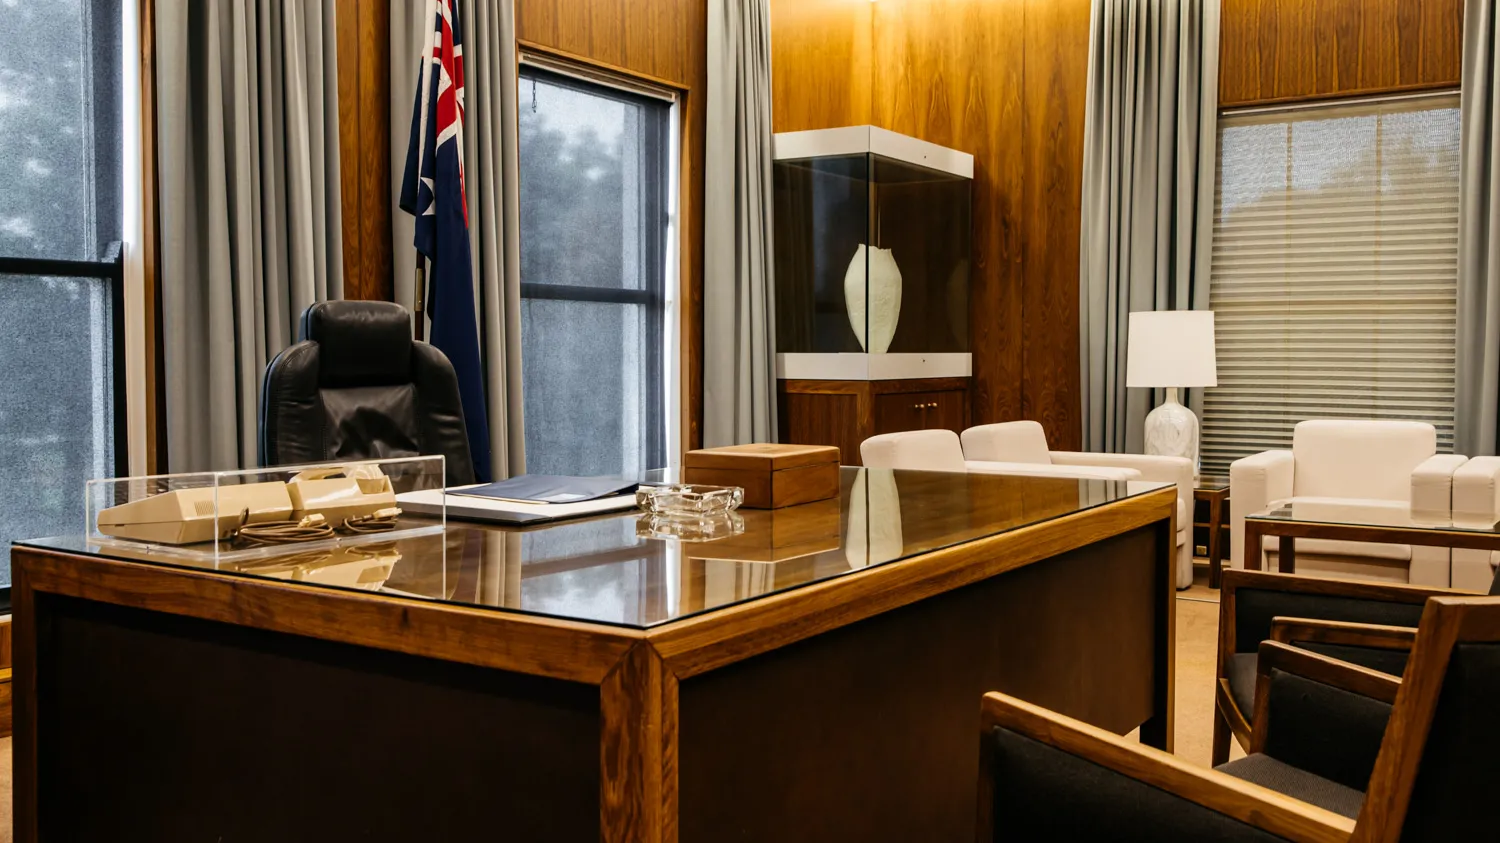 Prime Minister's Suite